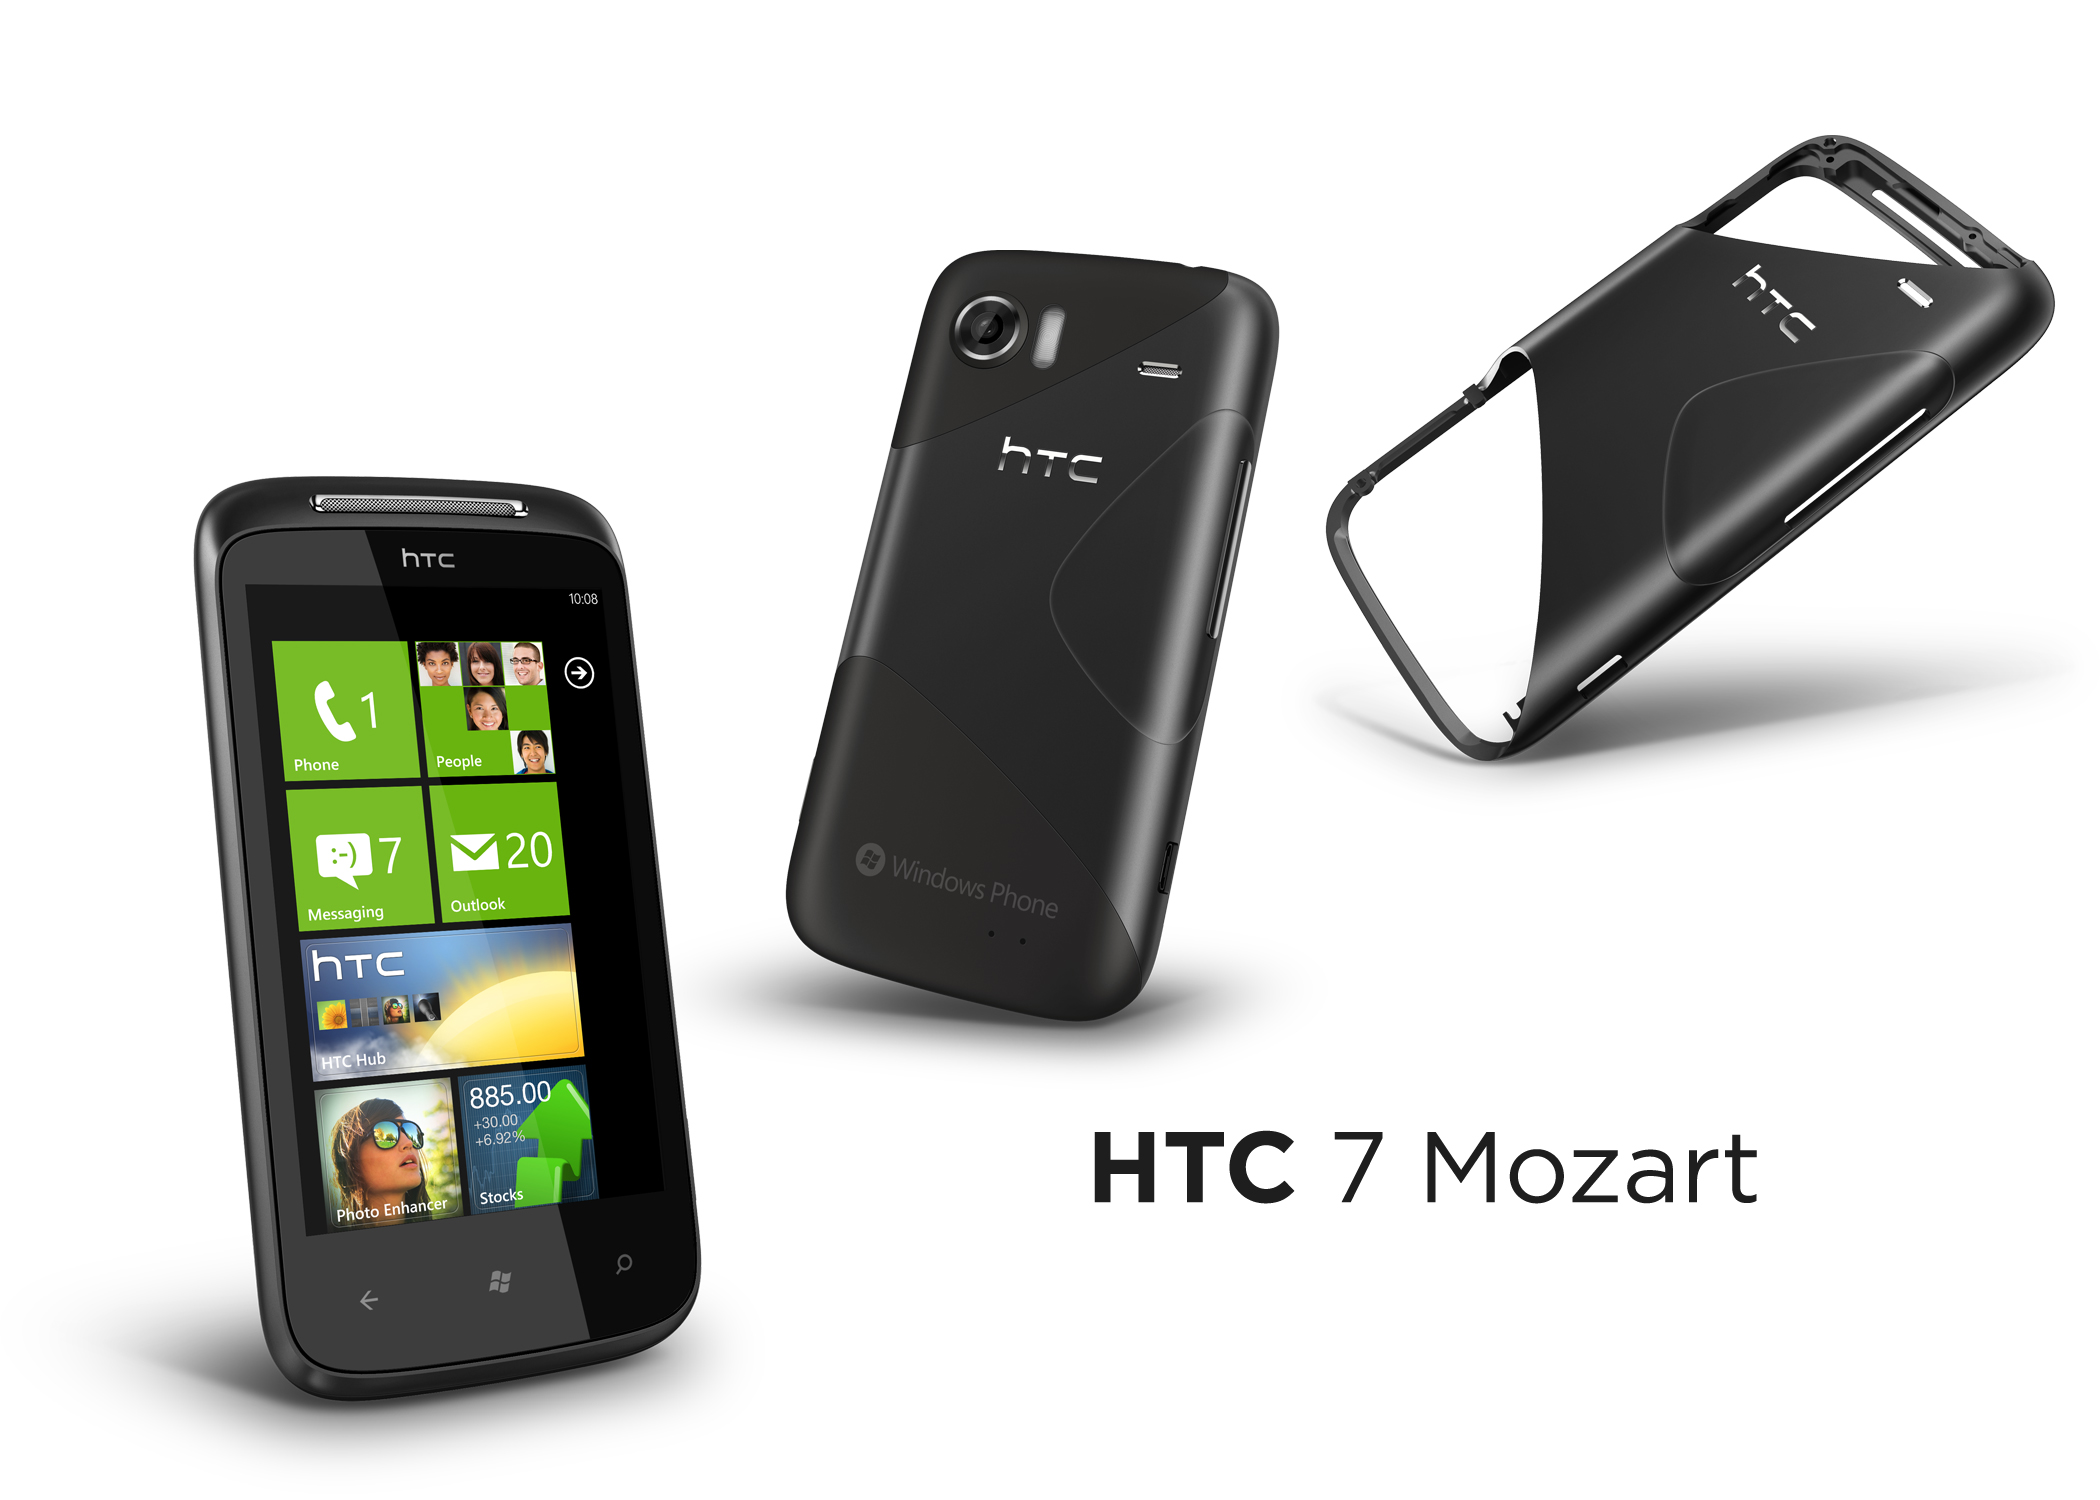 HTC 7 Mozart Review: Video - HTC 7 Mozart Review - Page 7 | TechRadar